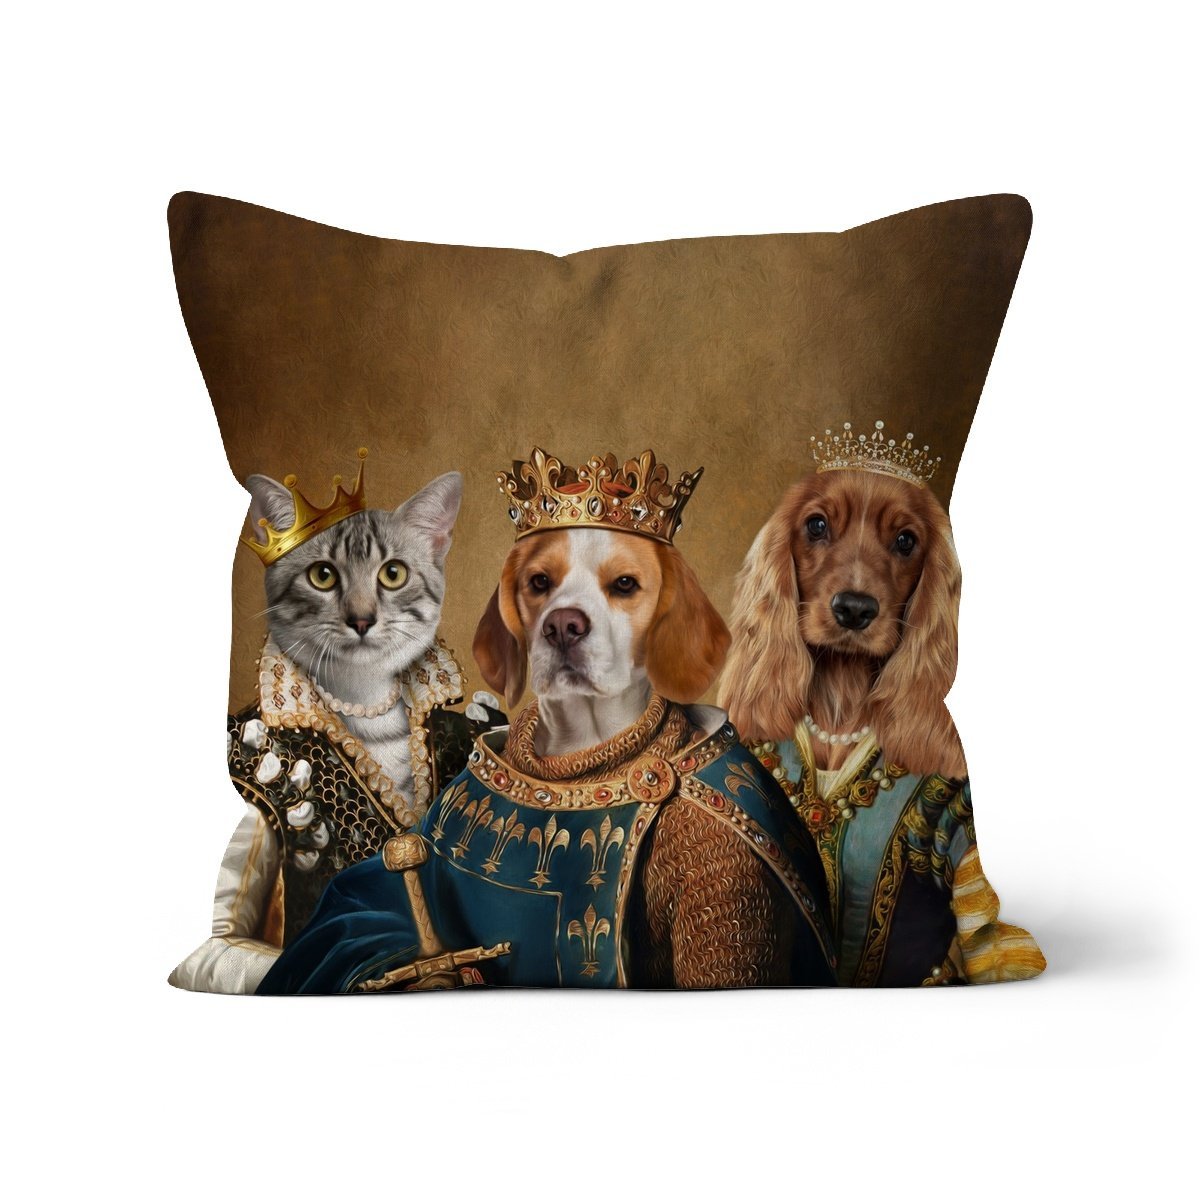 The Royals: Custom Pet Cushion - Paw & Glory - #pet portraits# - #dog portraits# - #pet portraits uk#paw and glory, pet portraits cushion,dog pillow custom, custom pet pillows, pup pillows, pillow with dogs face, dog pillow cases